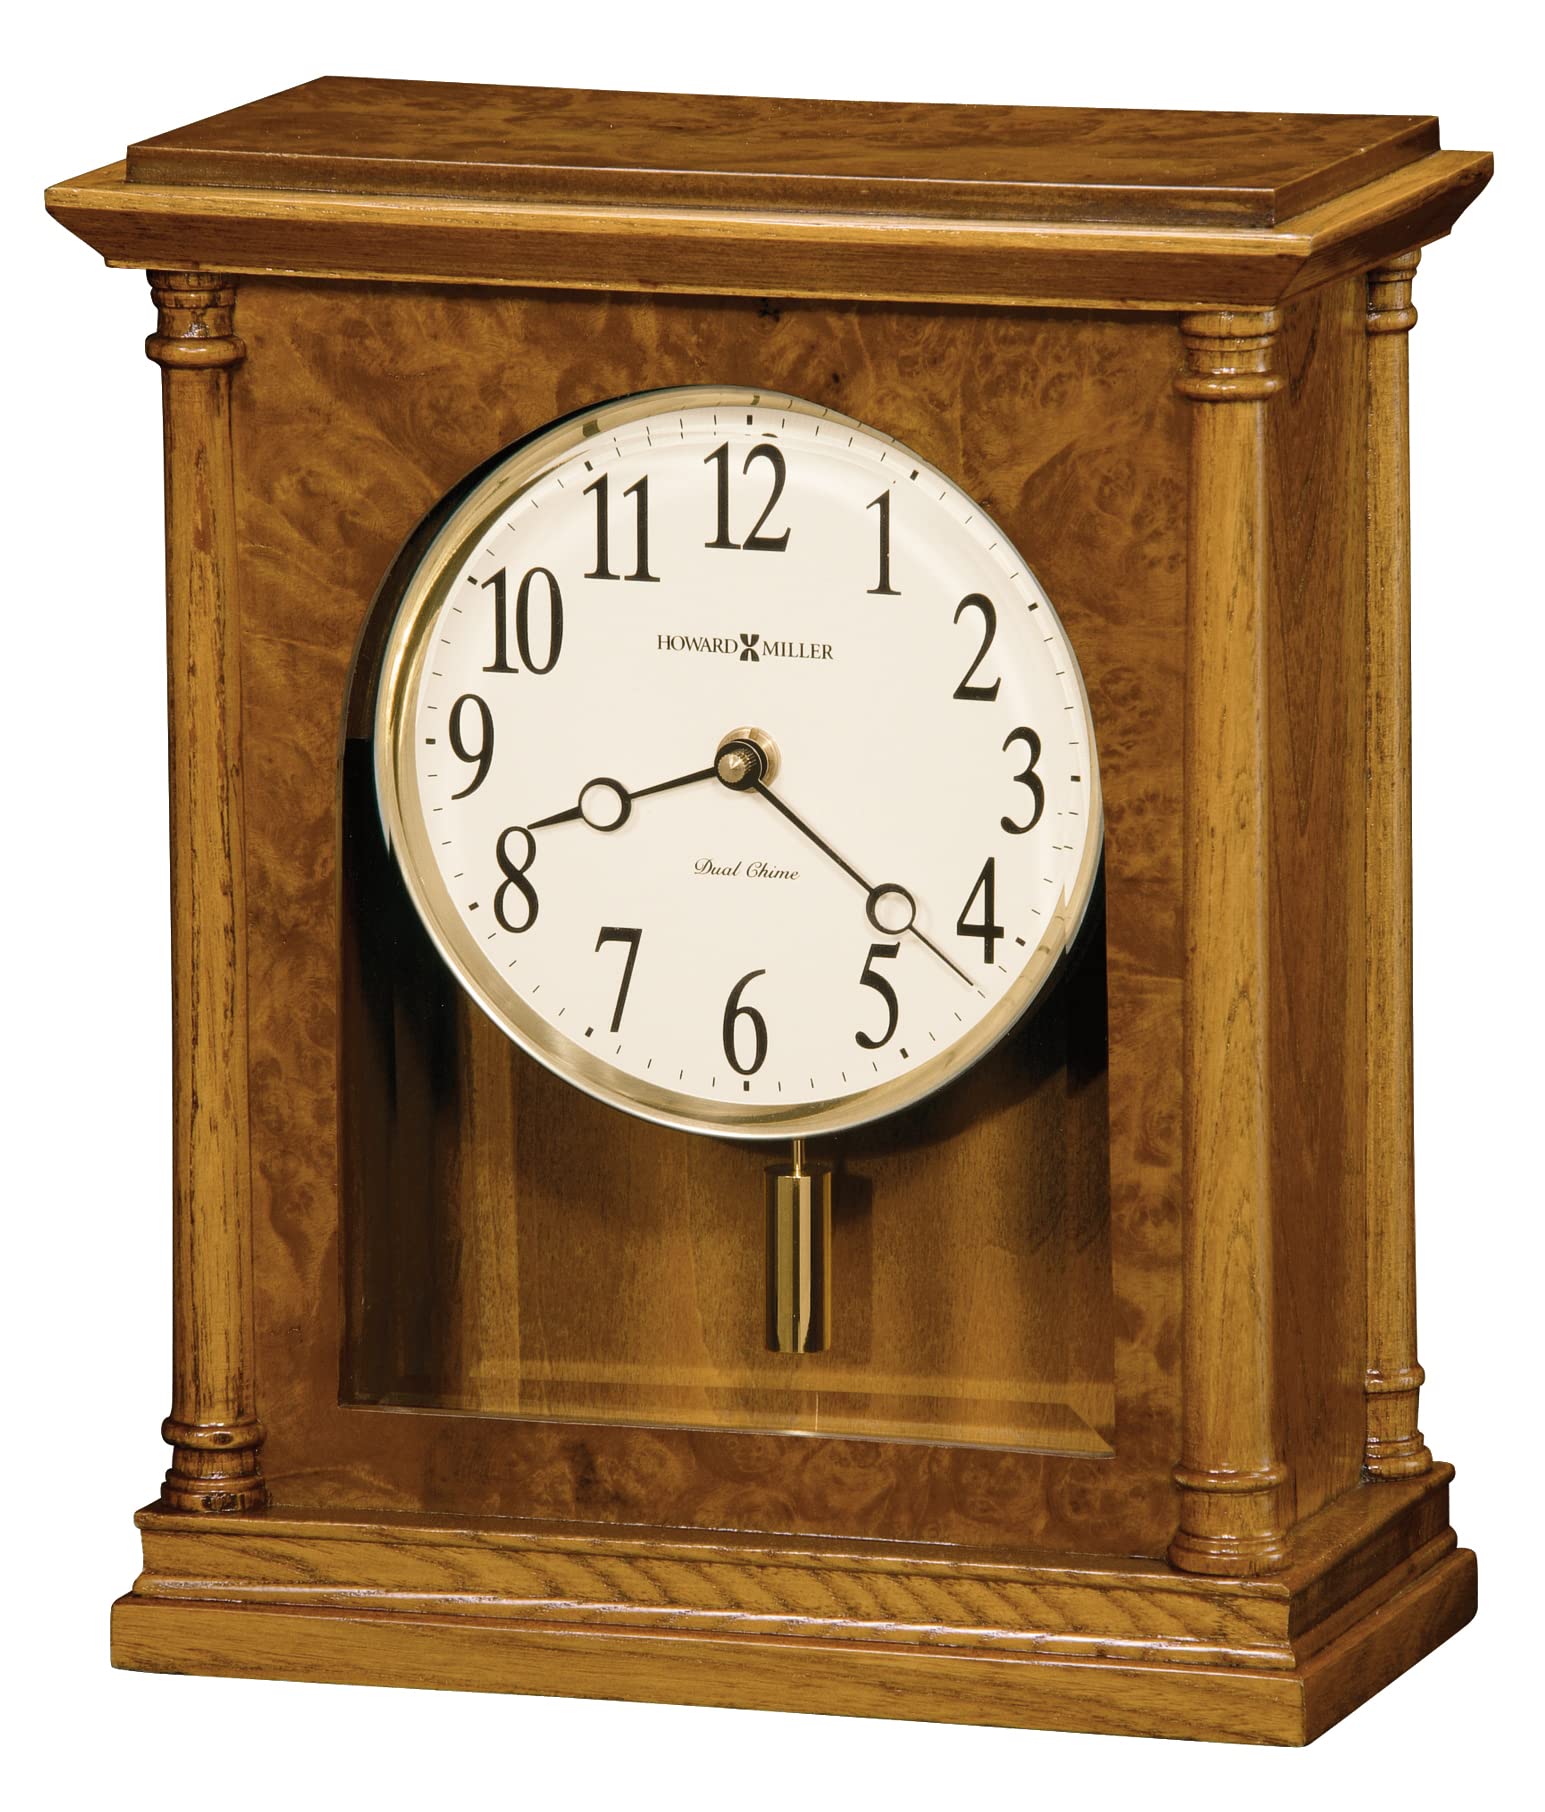 Howard Miller Leadore Mantel Clock 547-726 – Golden Oak Finish, Antique Home Decor, Brass-Finished Cylindrical Pendulum, Volume Control, Quartz, Dual-Chime Movement